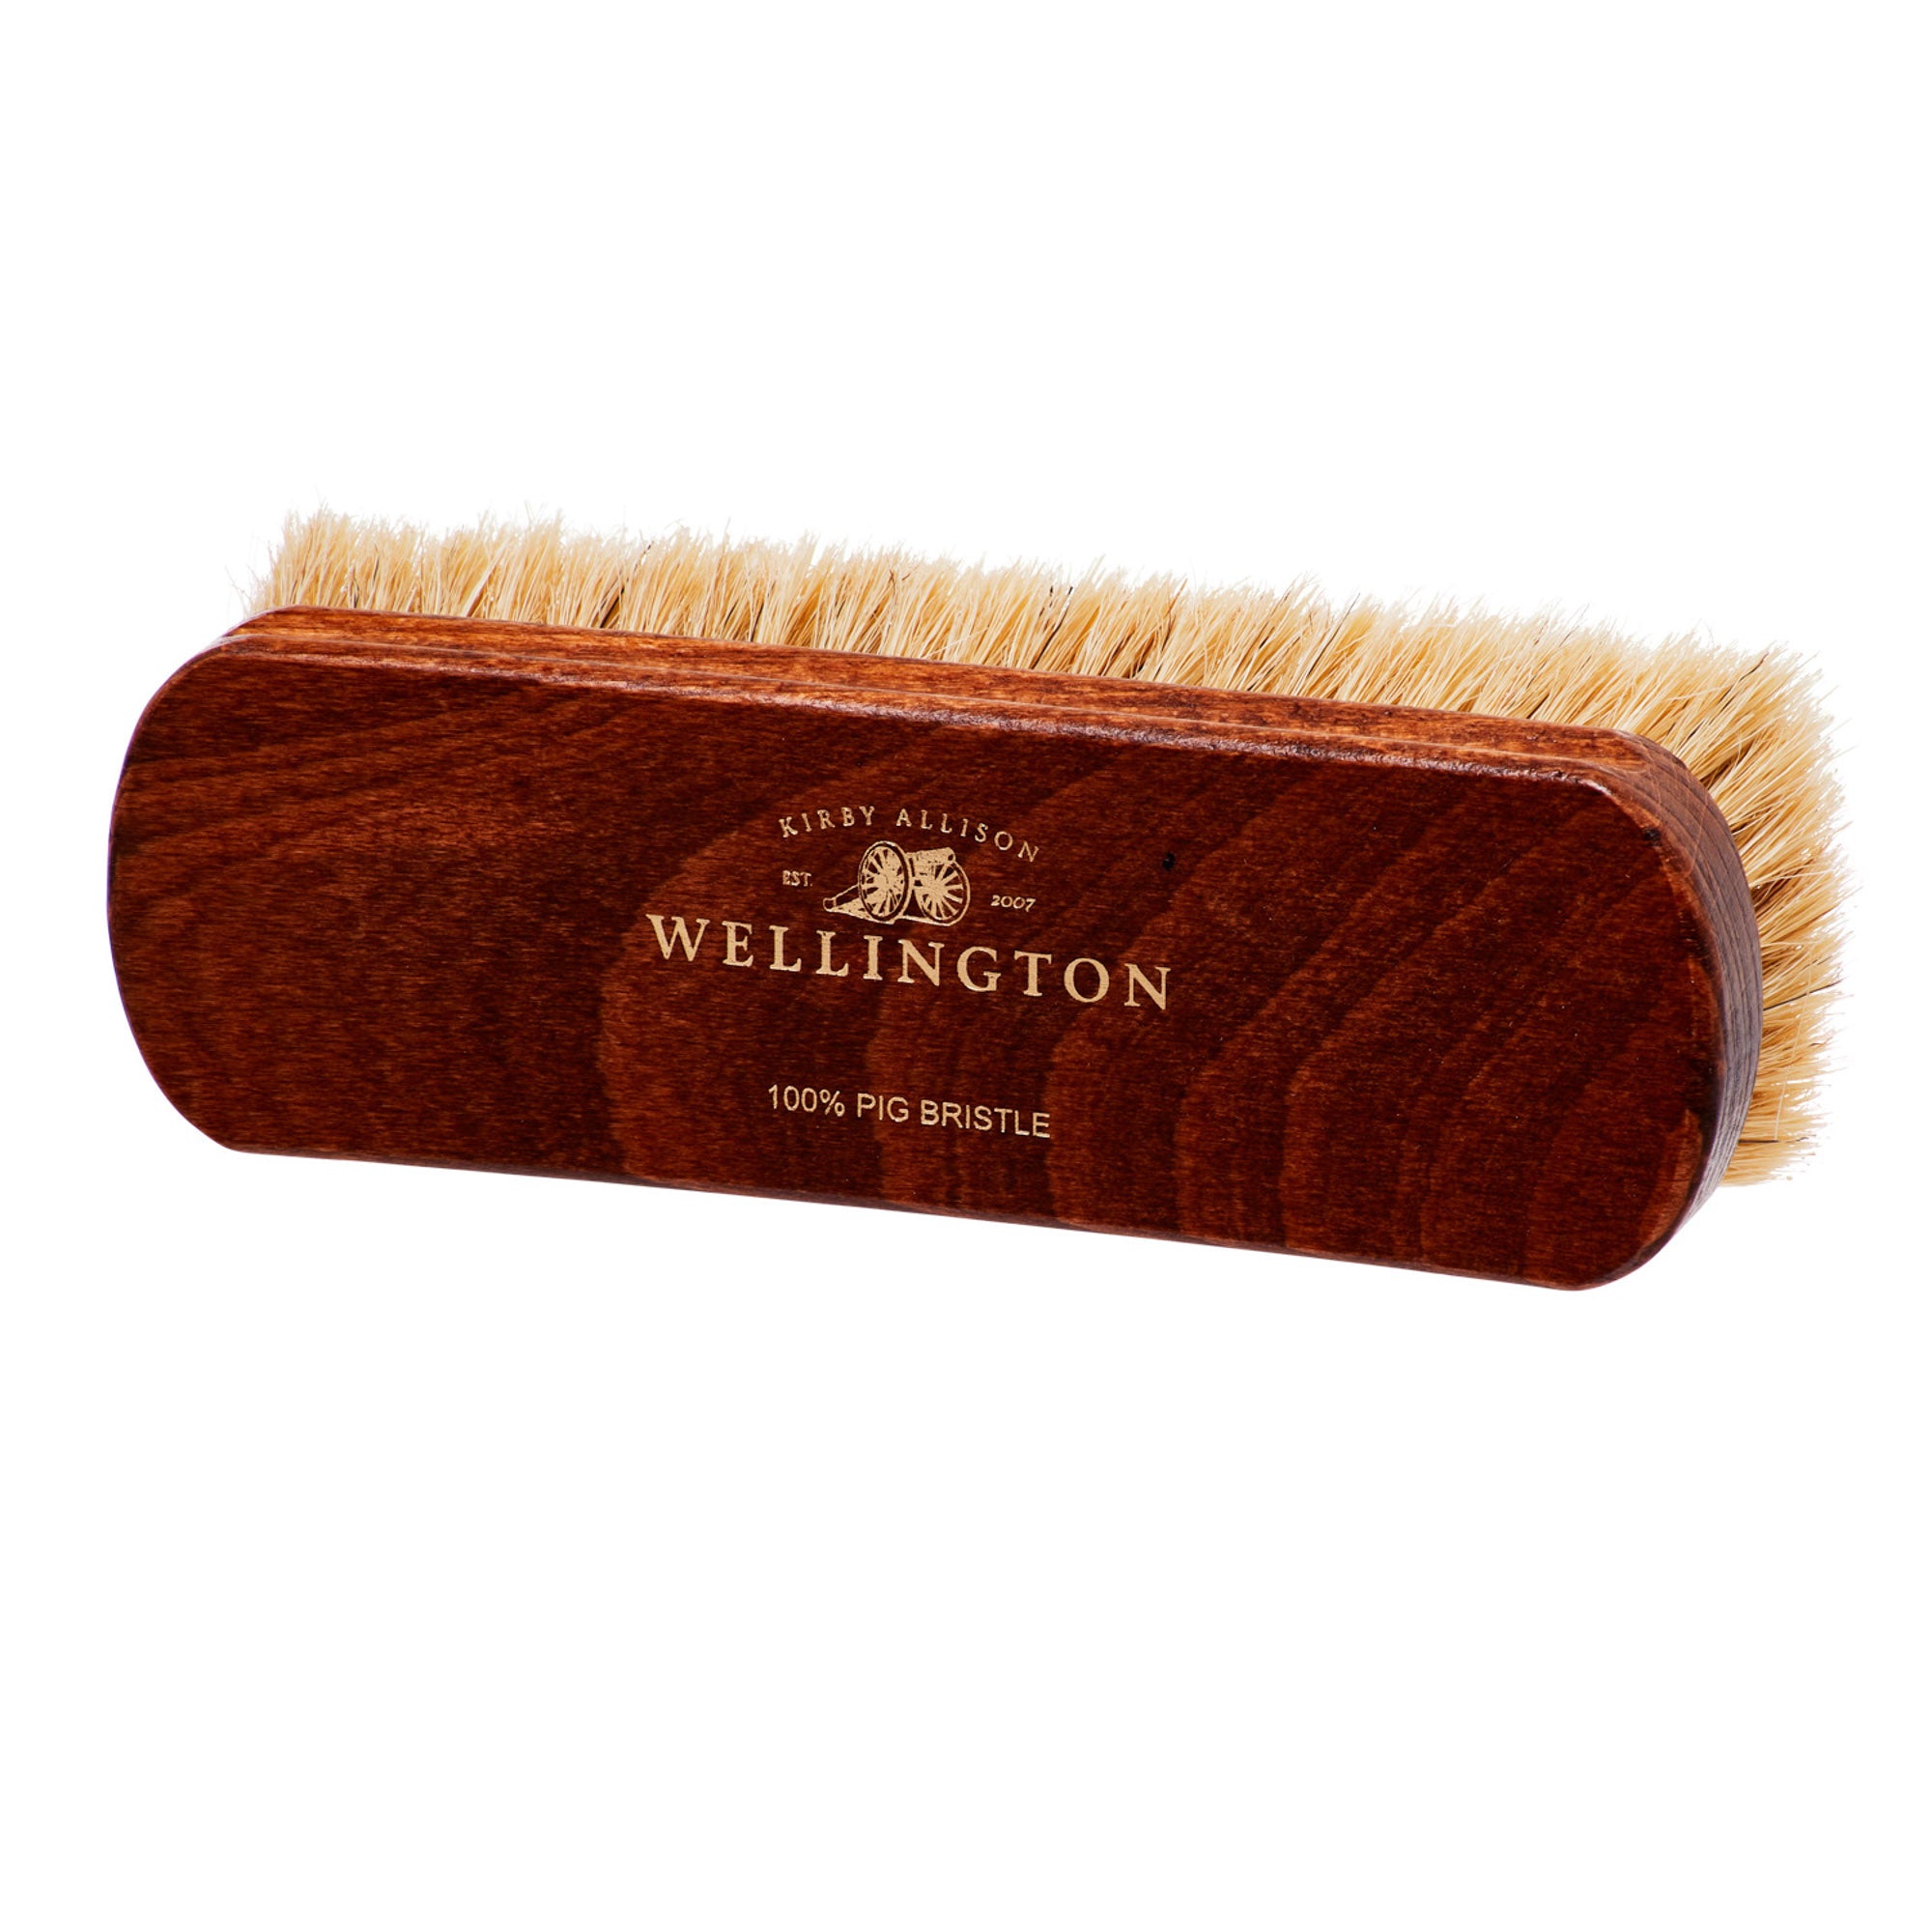 A Deluxe Wellington Pig Bristle Shoe Polishing Brush with the word KirbyAllison.com on it.